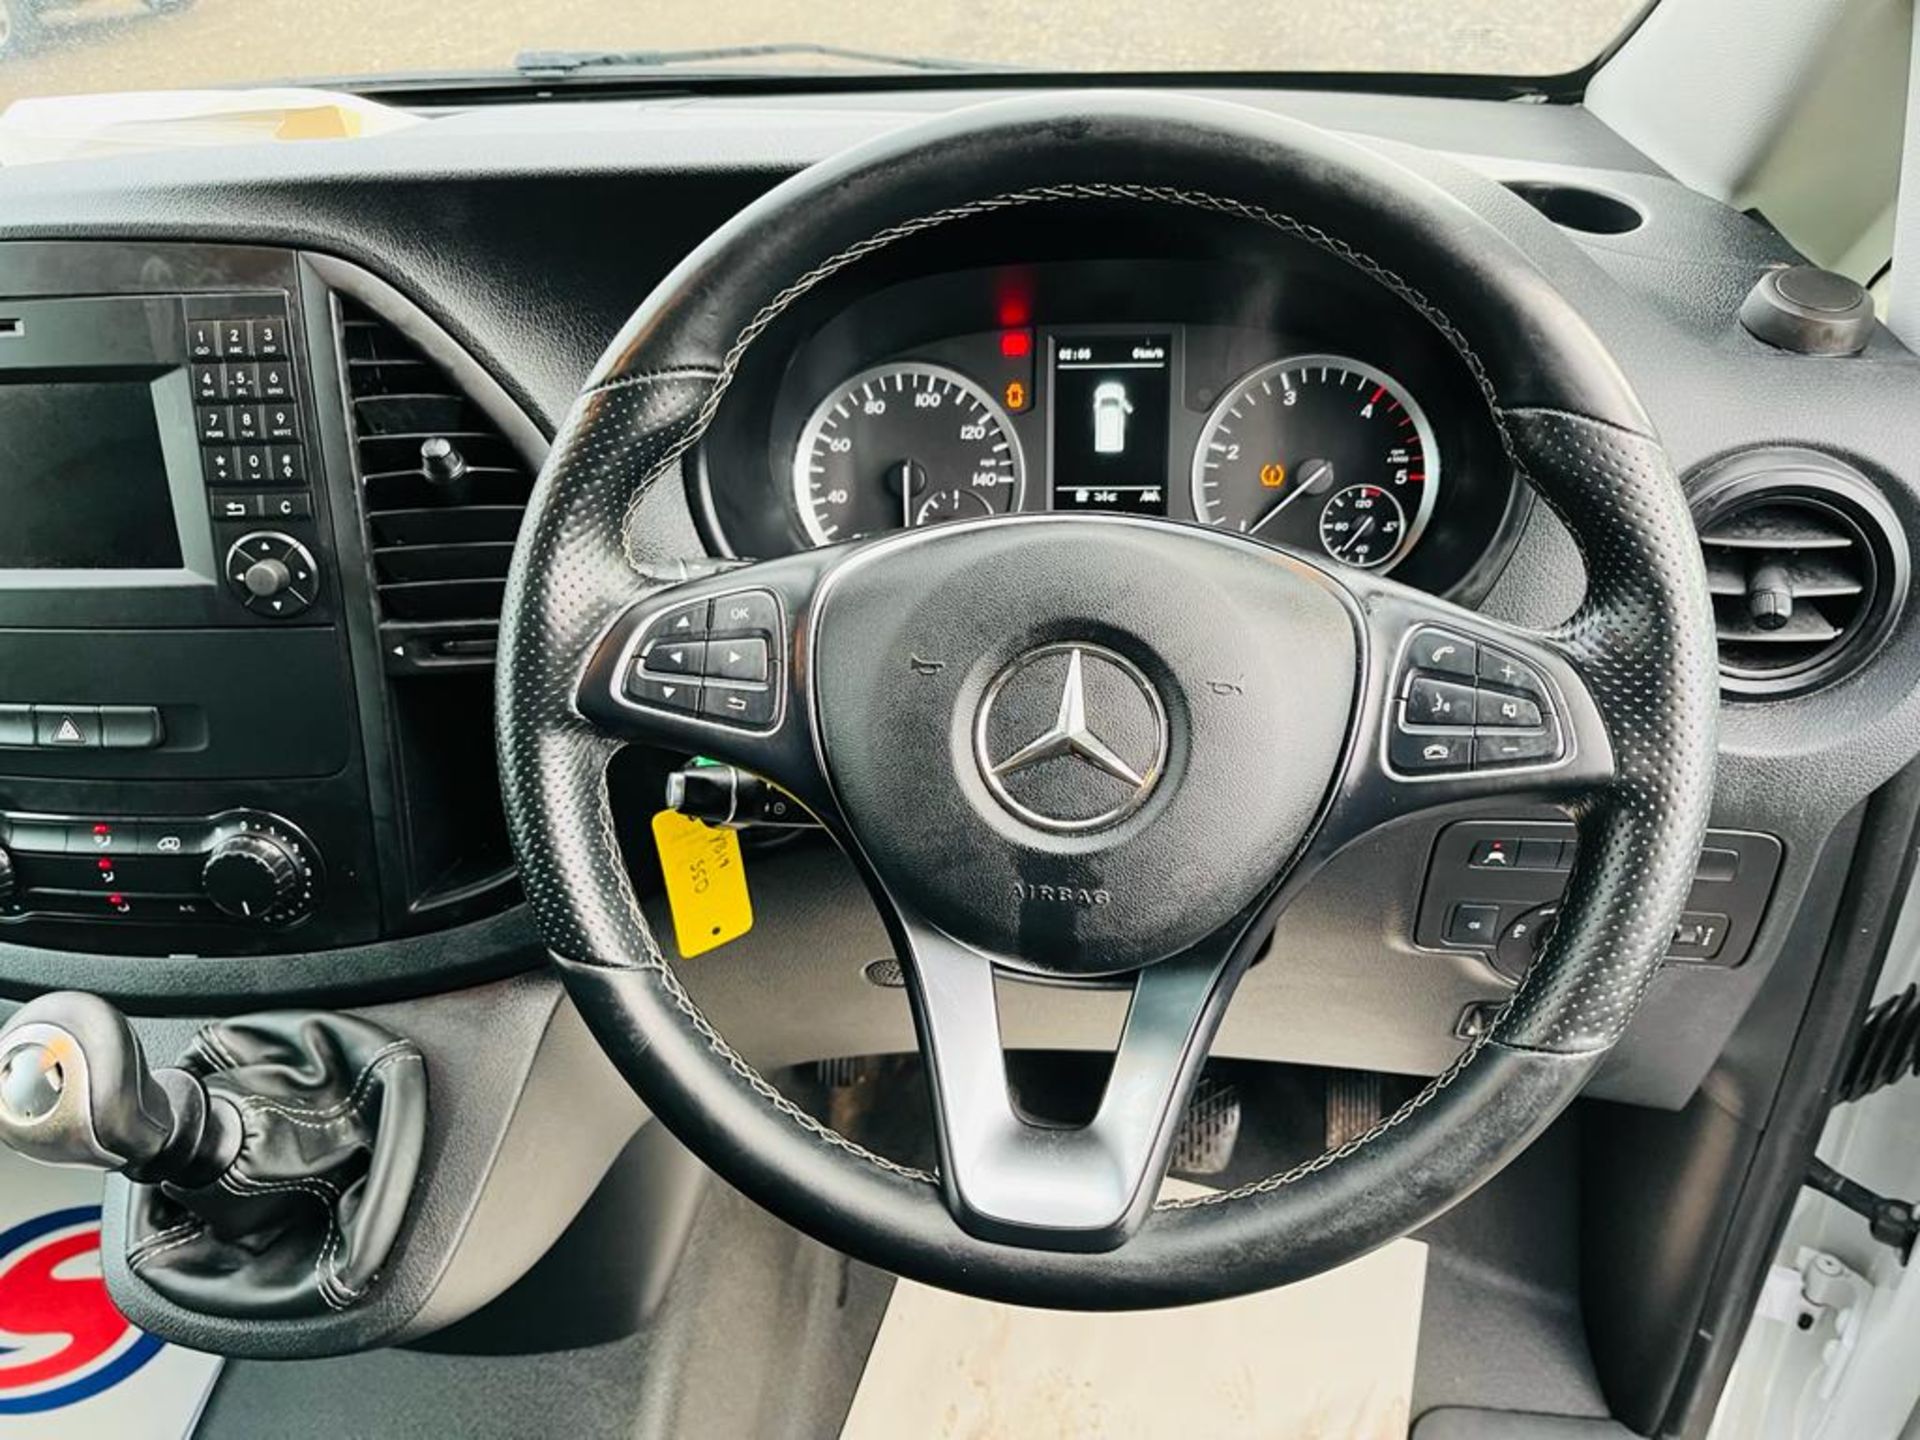 ** ON SALE **Mercedes Benz Vito 111 1.6 CDI Long wheel Base 2019 '19 Reg' - Sat Nav - ULEZ Compliant - Image 22 of 24